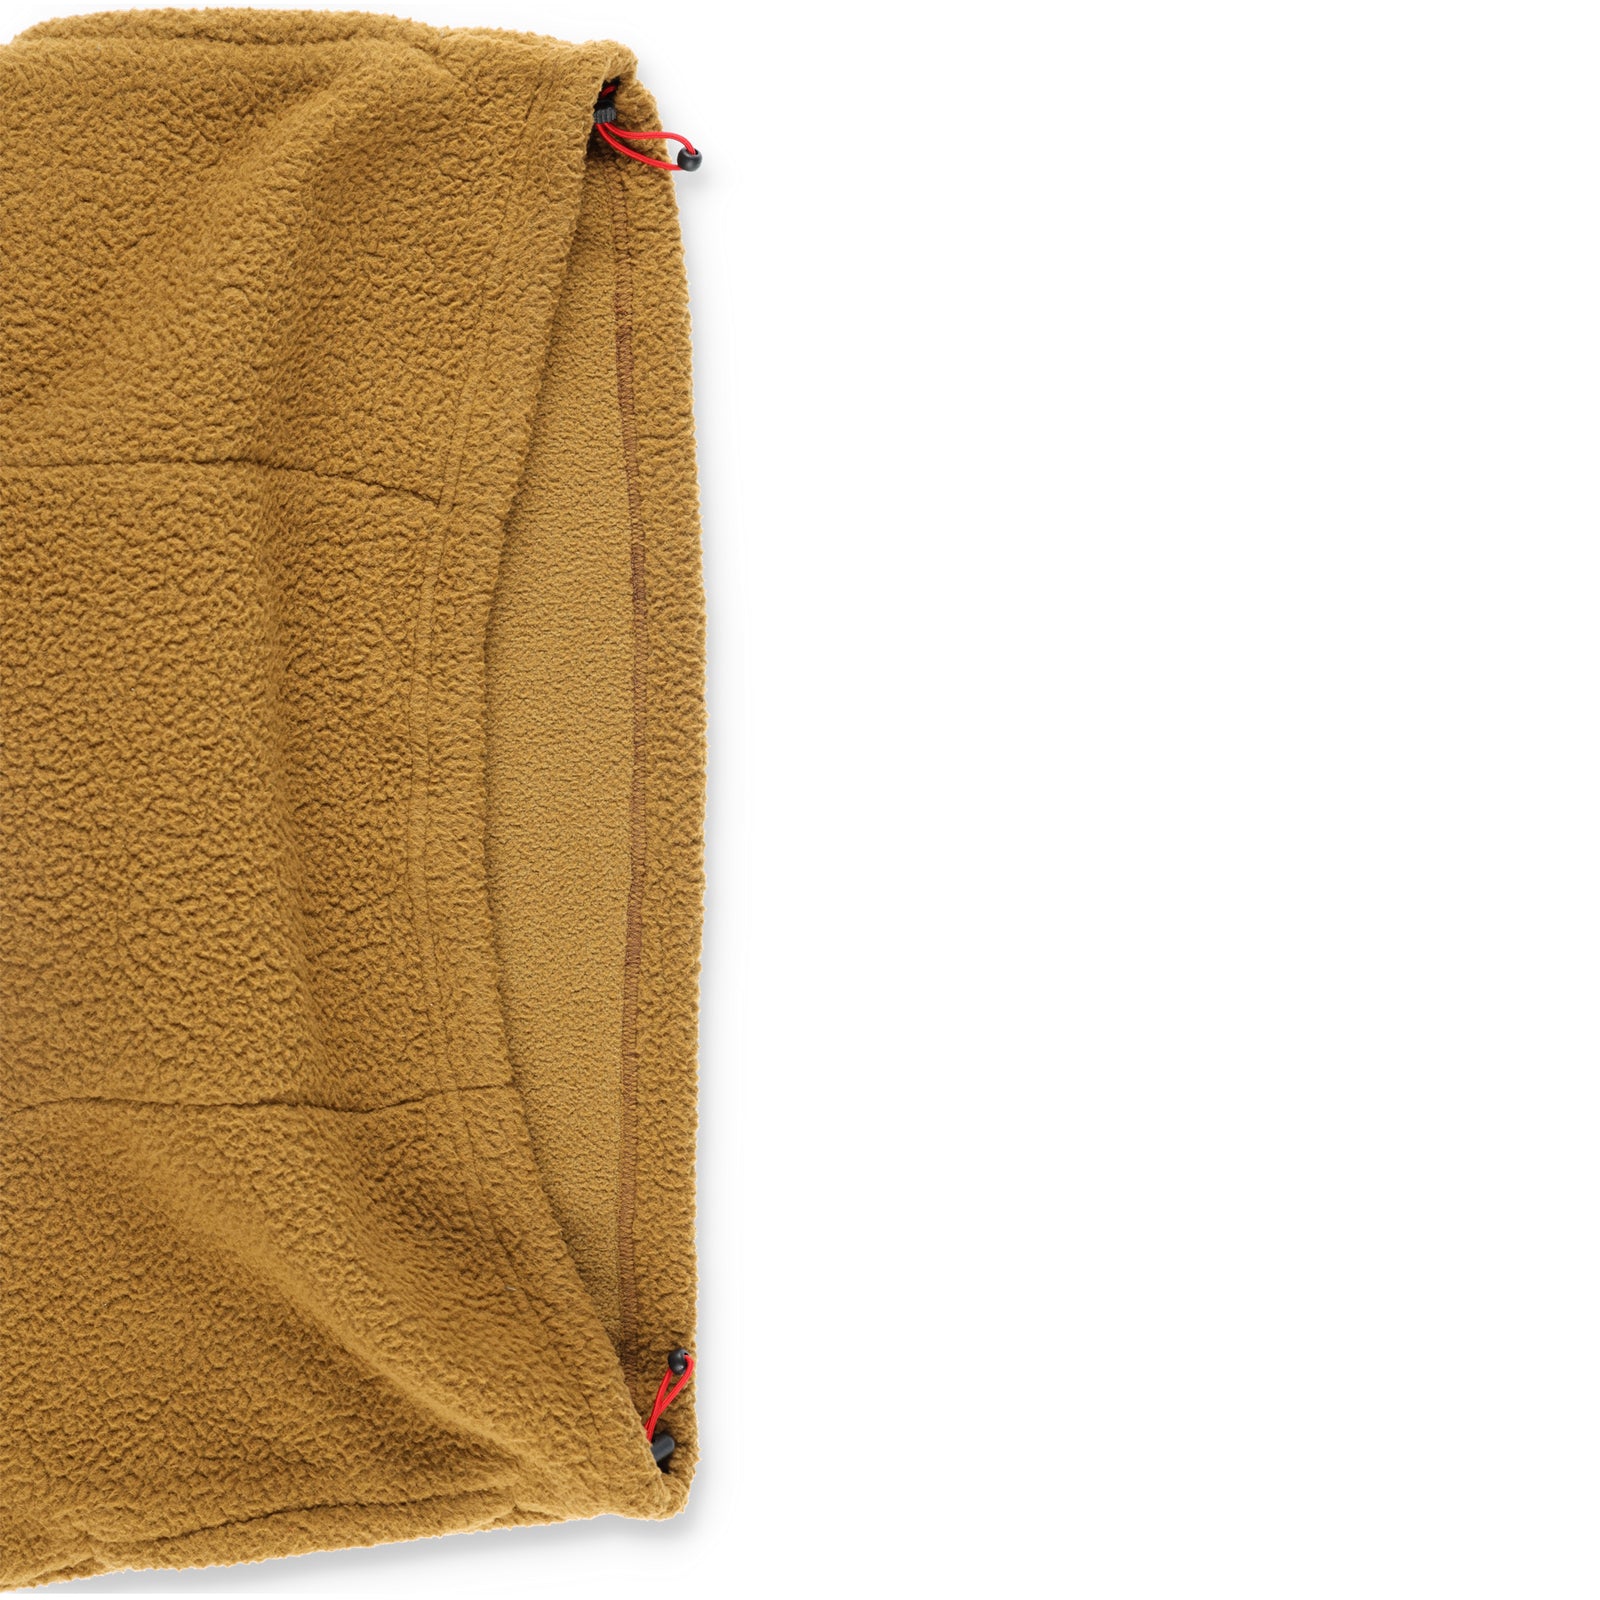 Detail shot of Topo Designs Men's Mountain Fleece Pullover in "dark khaki" brown showing drawstring cinch cord at bottom hem.